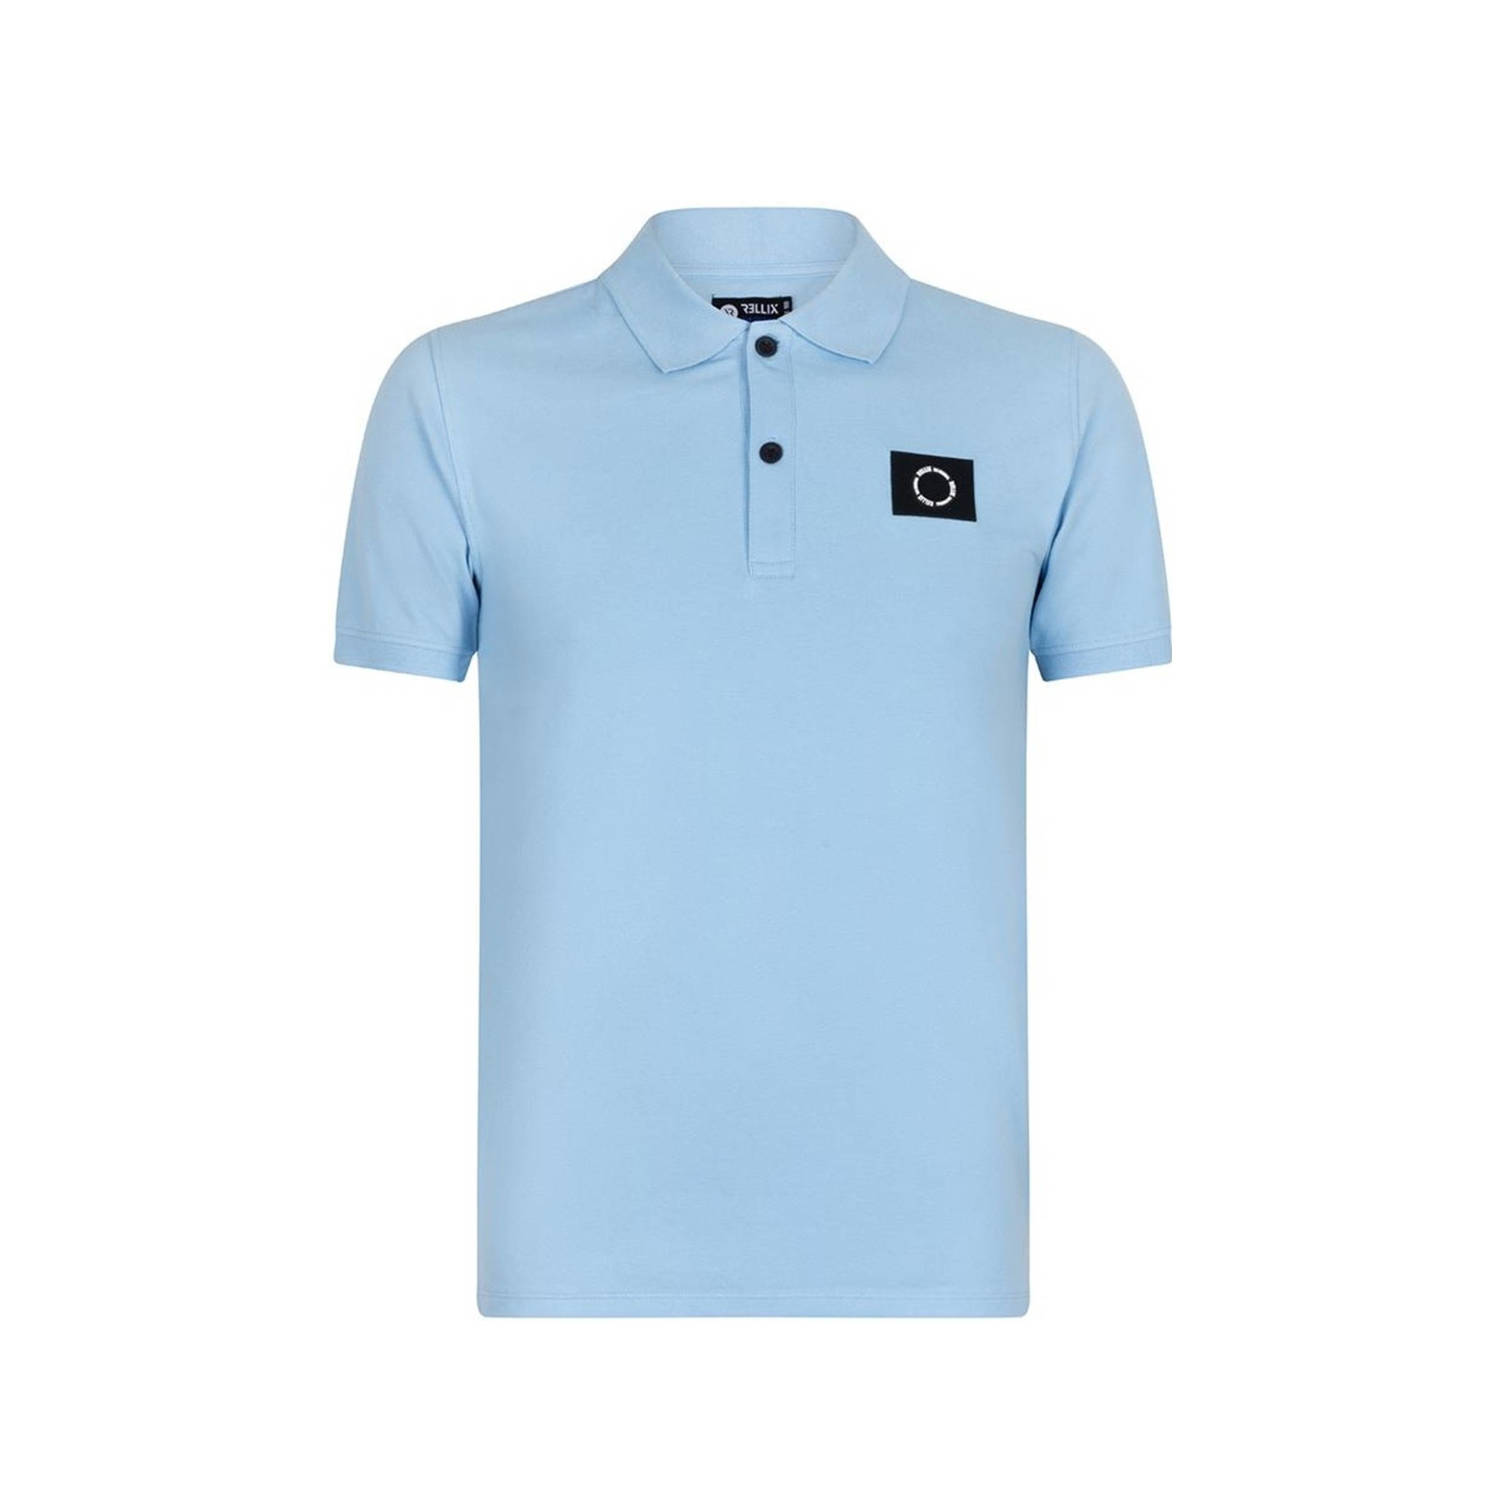 Rellix T-shirt PIque met logo blauw